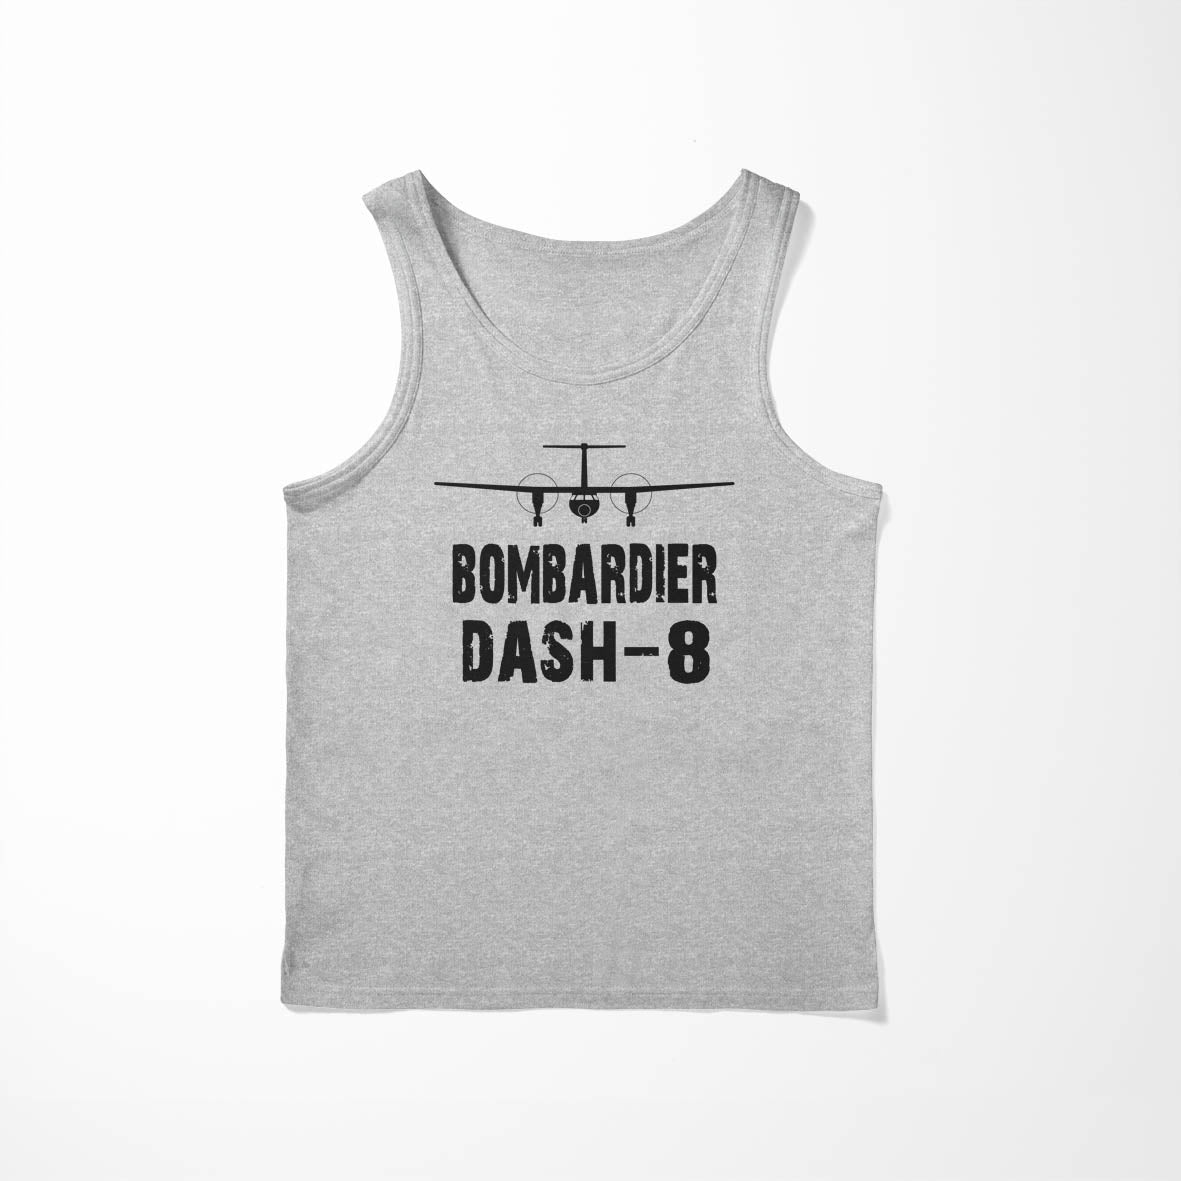 Bombardier Dash-8 & Plane Designed Tank Tops